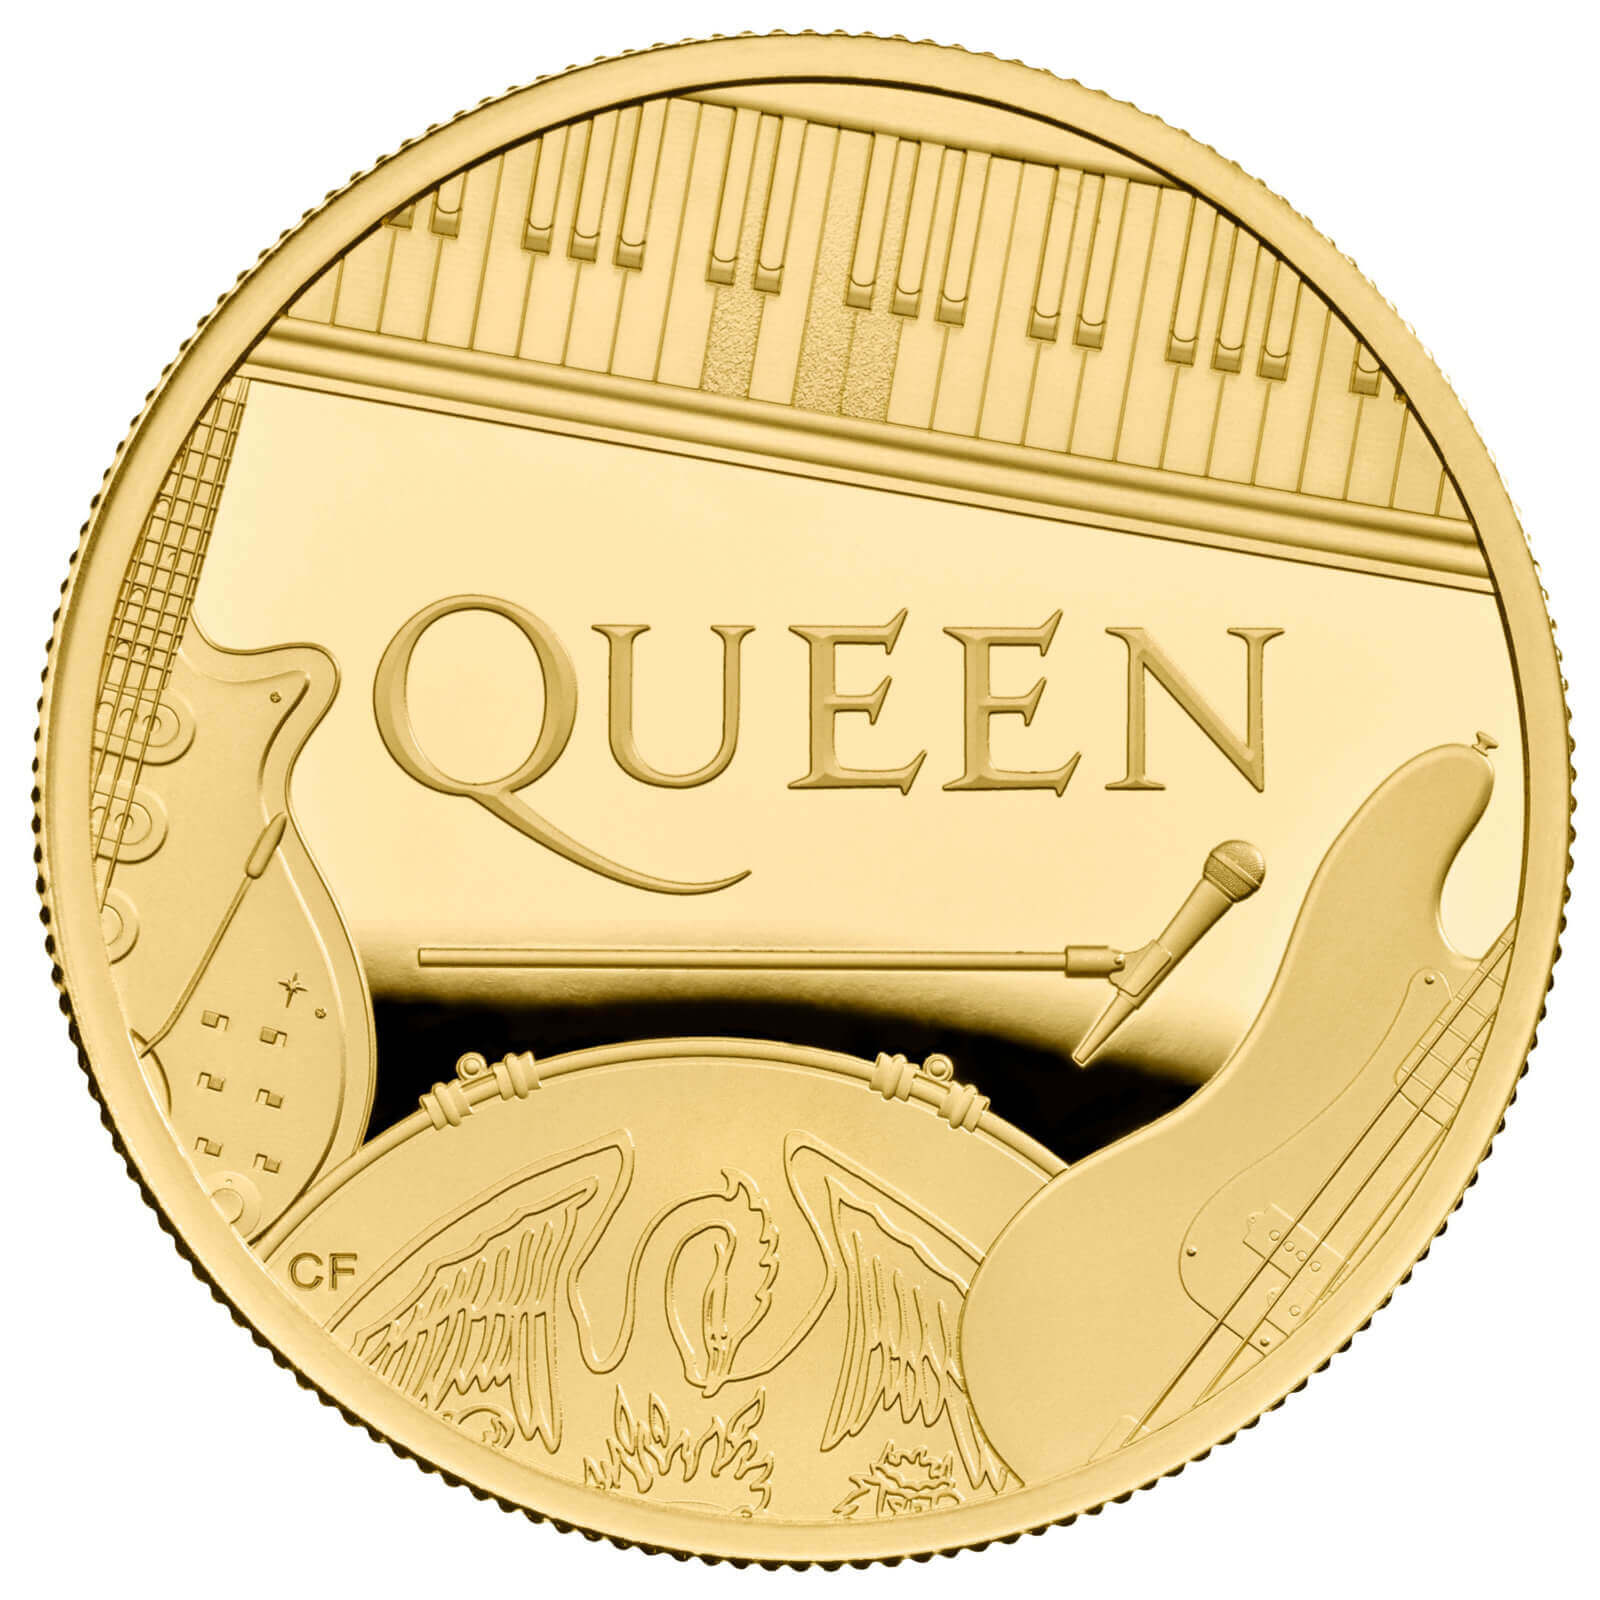 Queen ganha moeda no Reino Unido